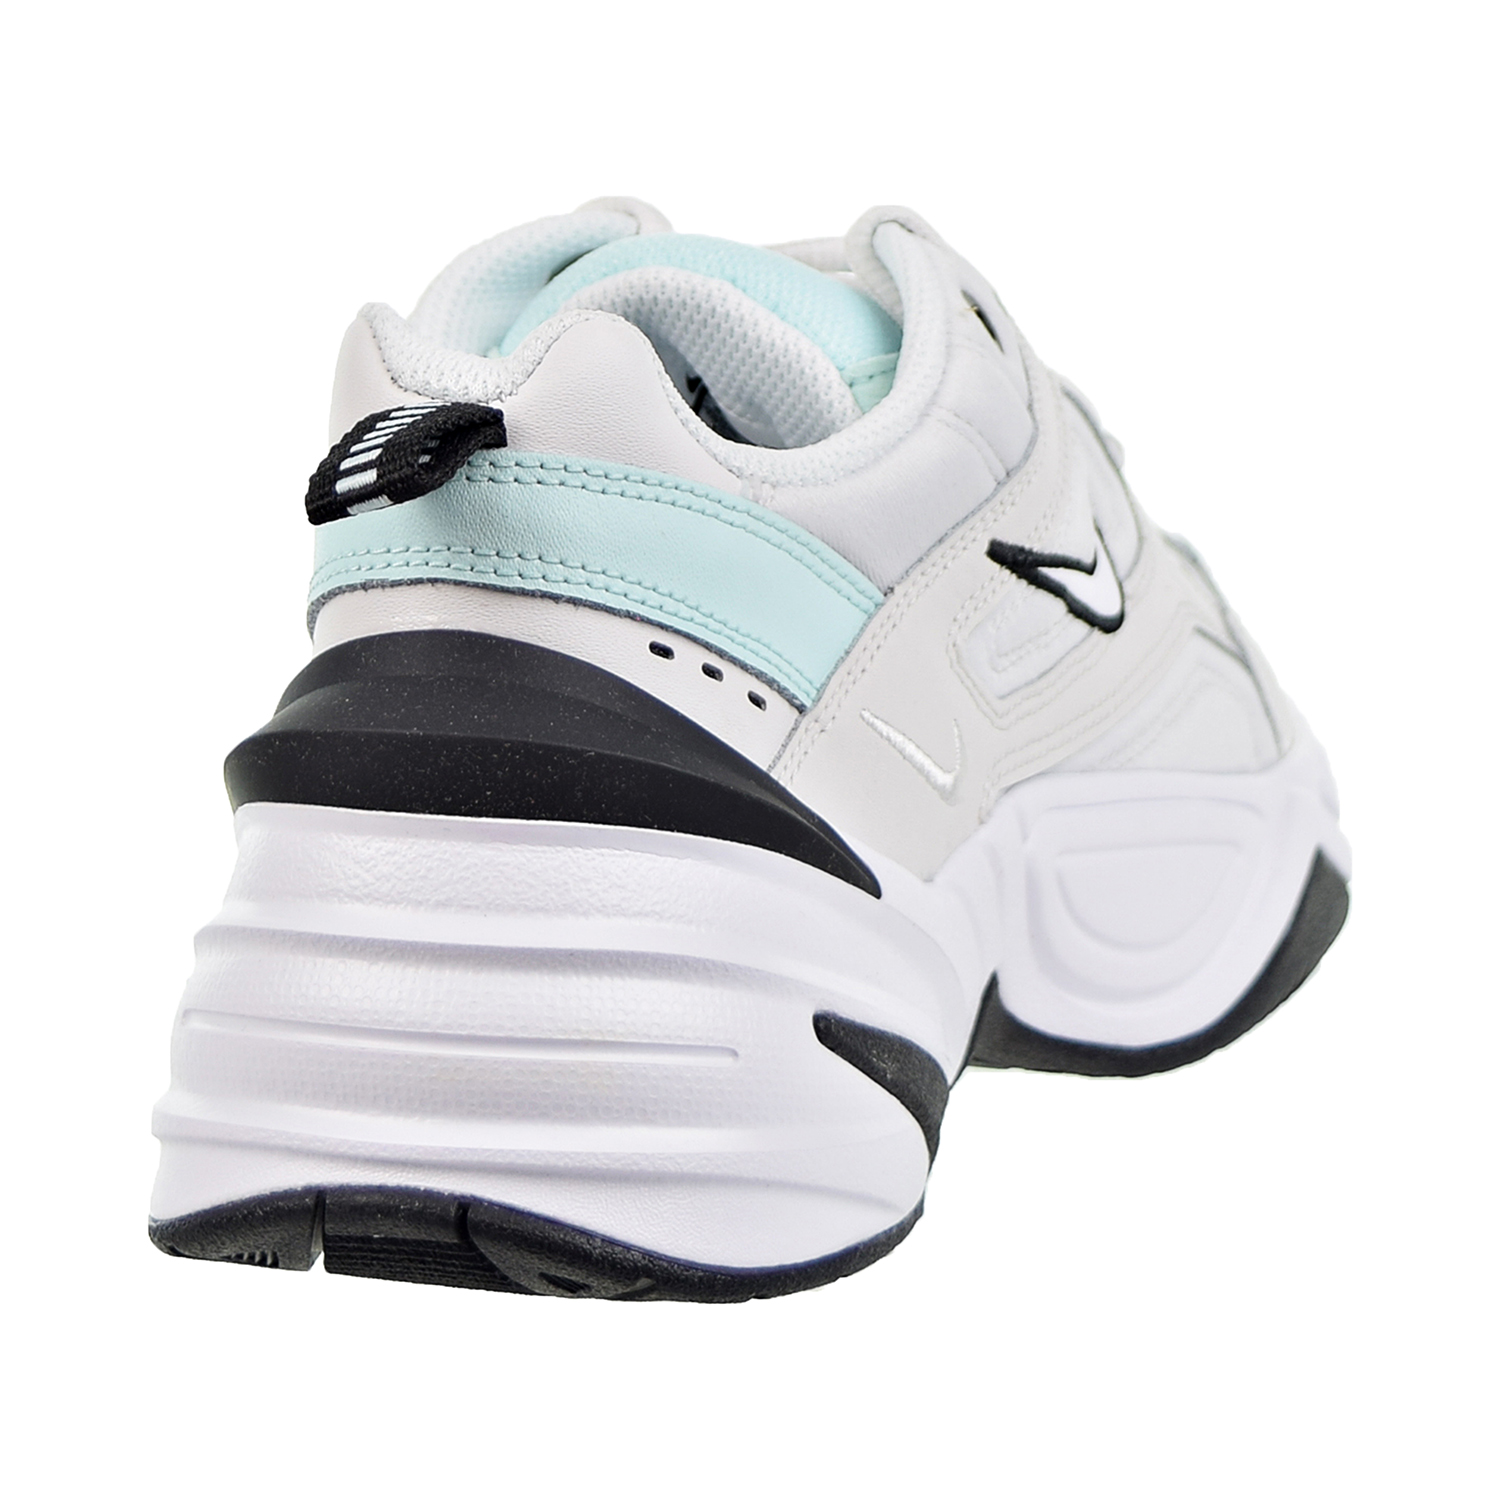 Athletic Shoes Nike Women S M2k Tekno Casual Shoes Platinum Tint Teal White Ao3108 013 New Puebla Tecnm Mx